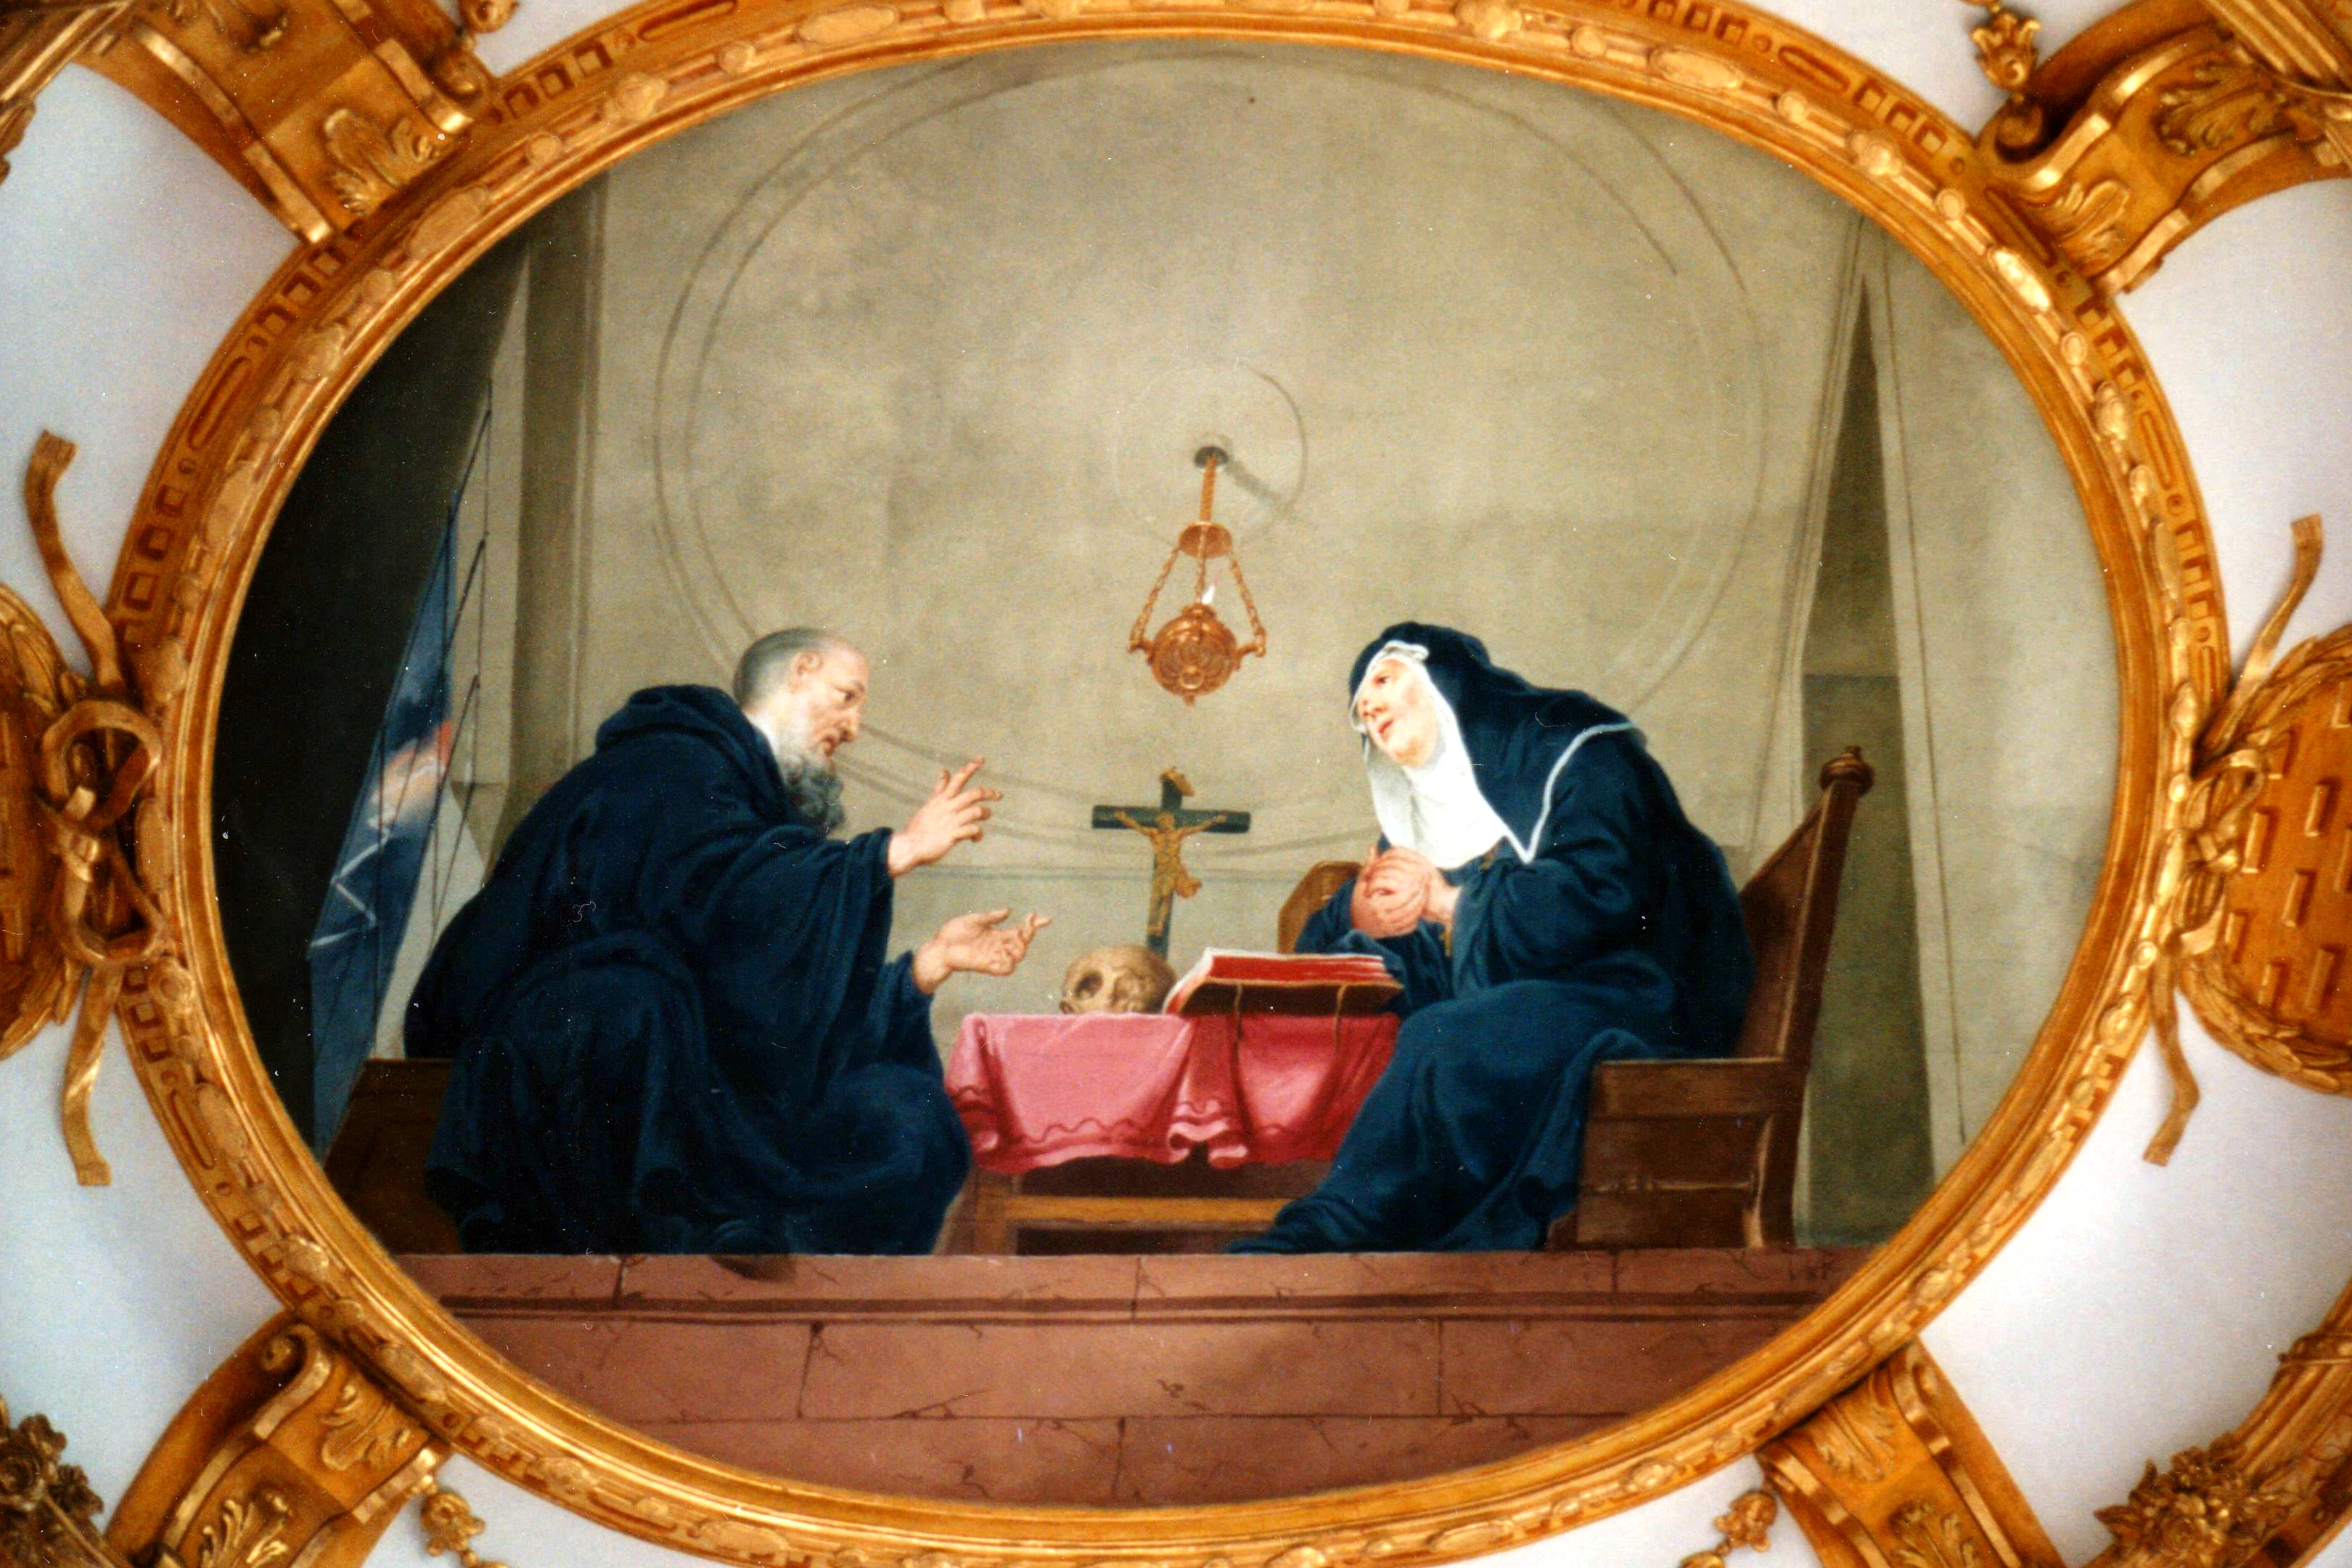 St. Scholastica and St. Benedict